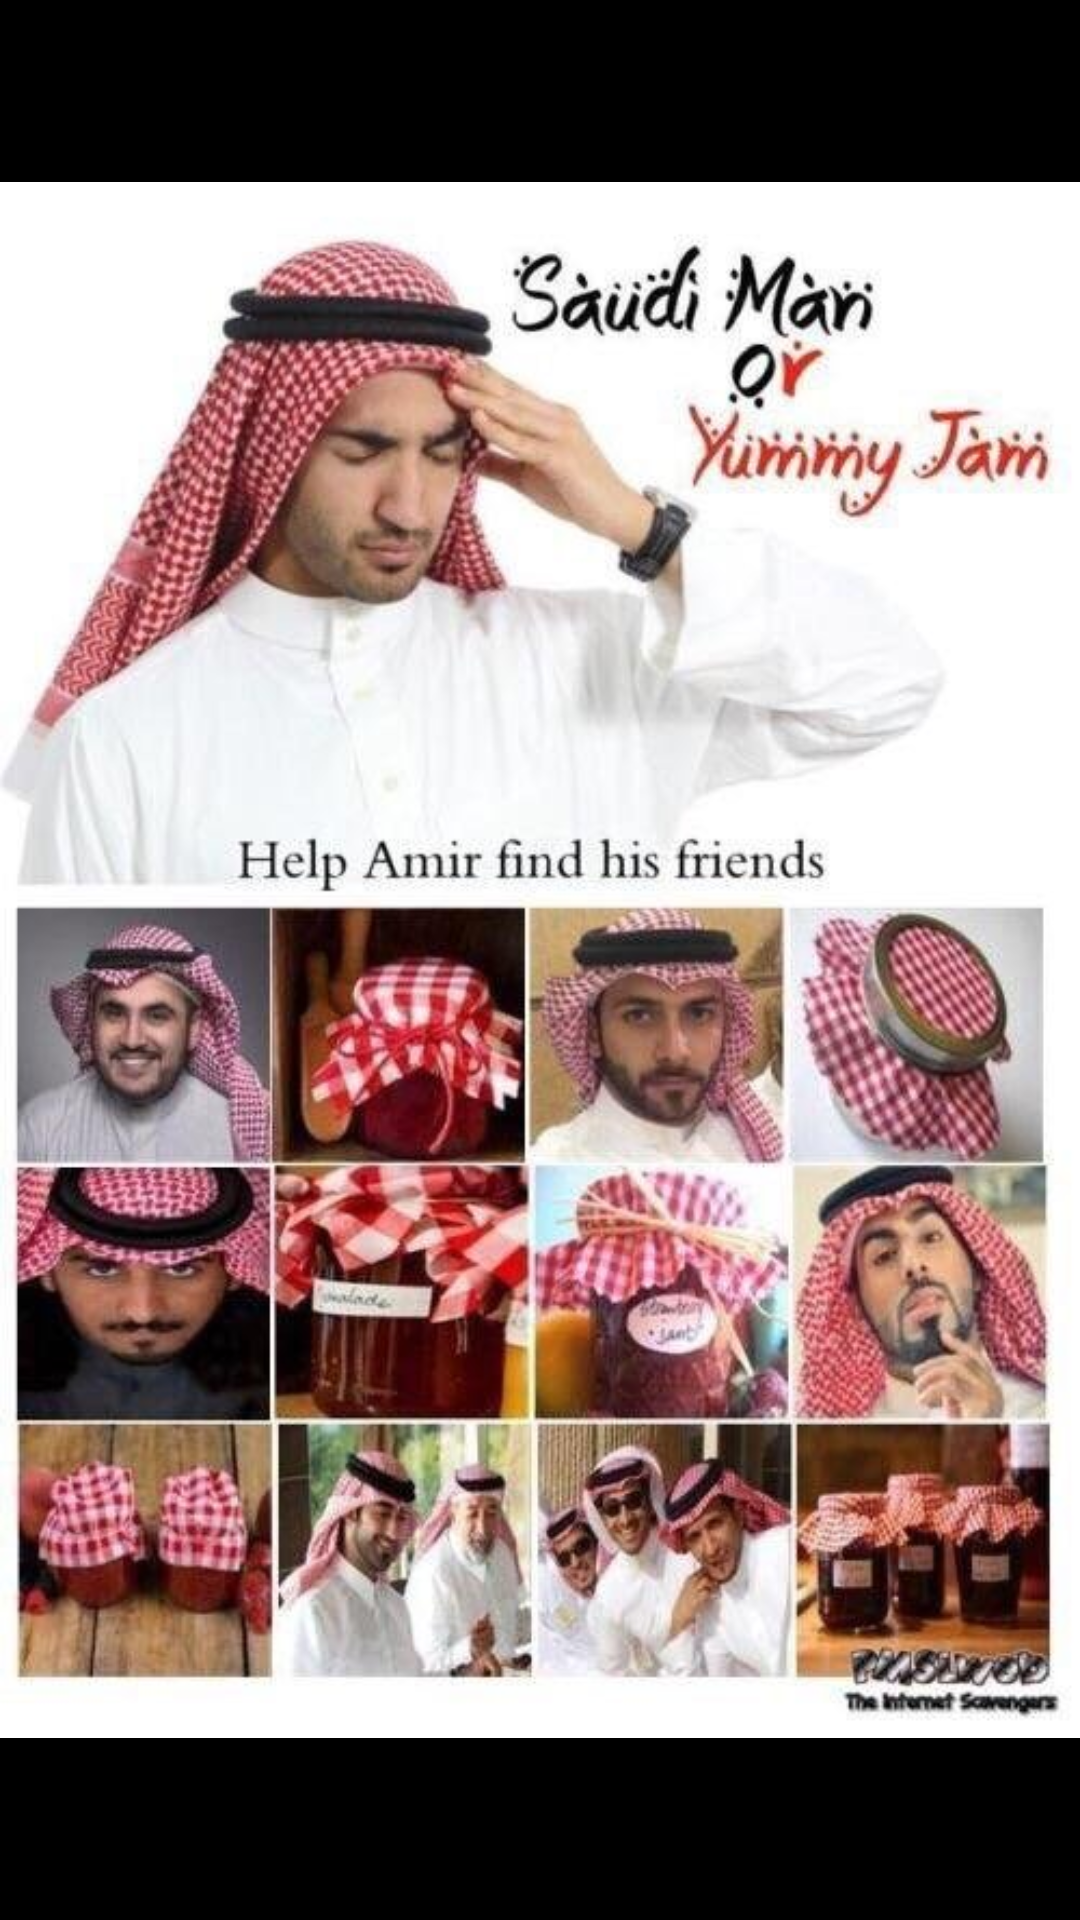 Saudi Man or Yummy Jam